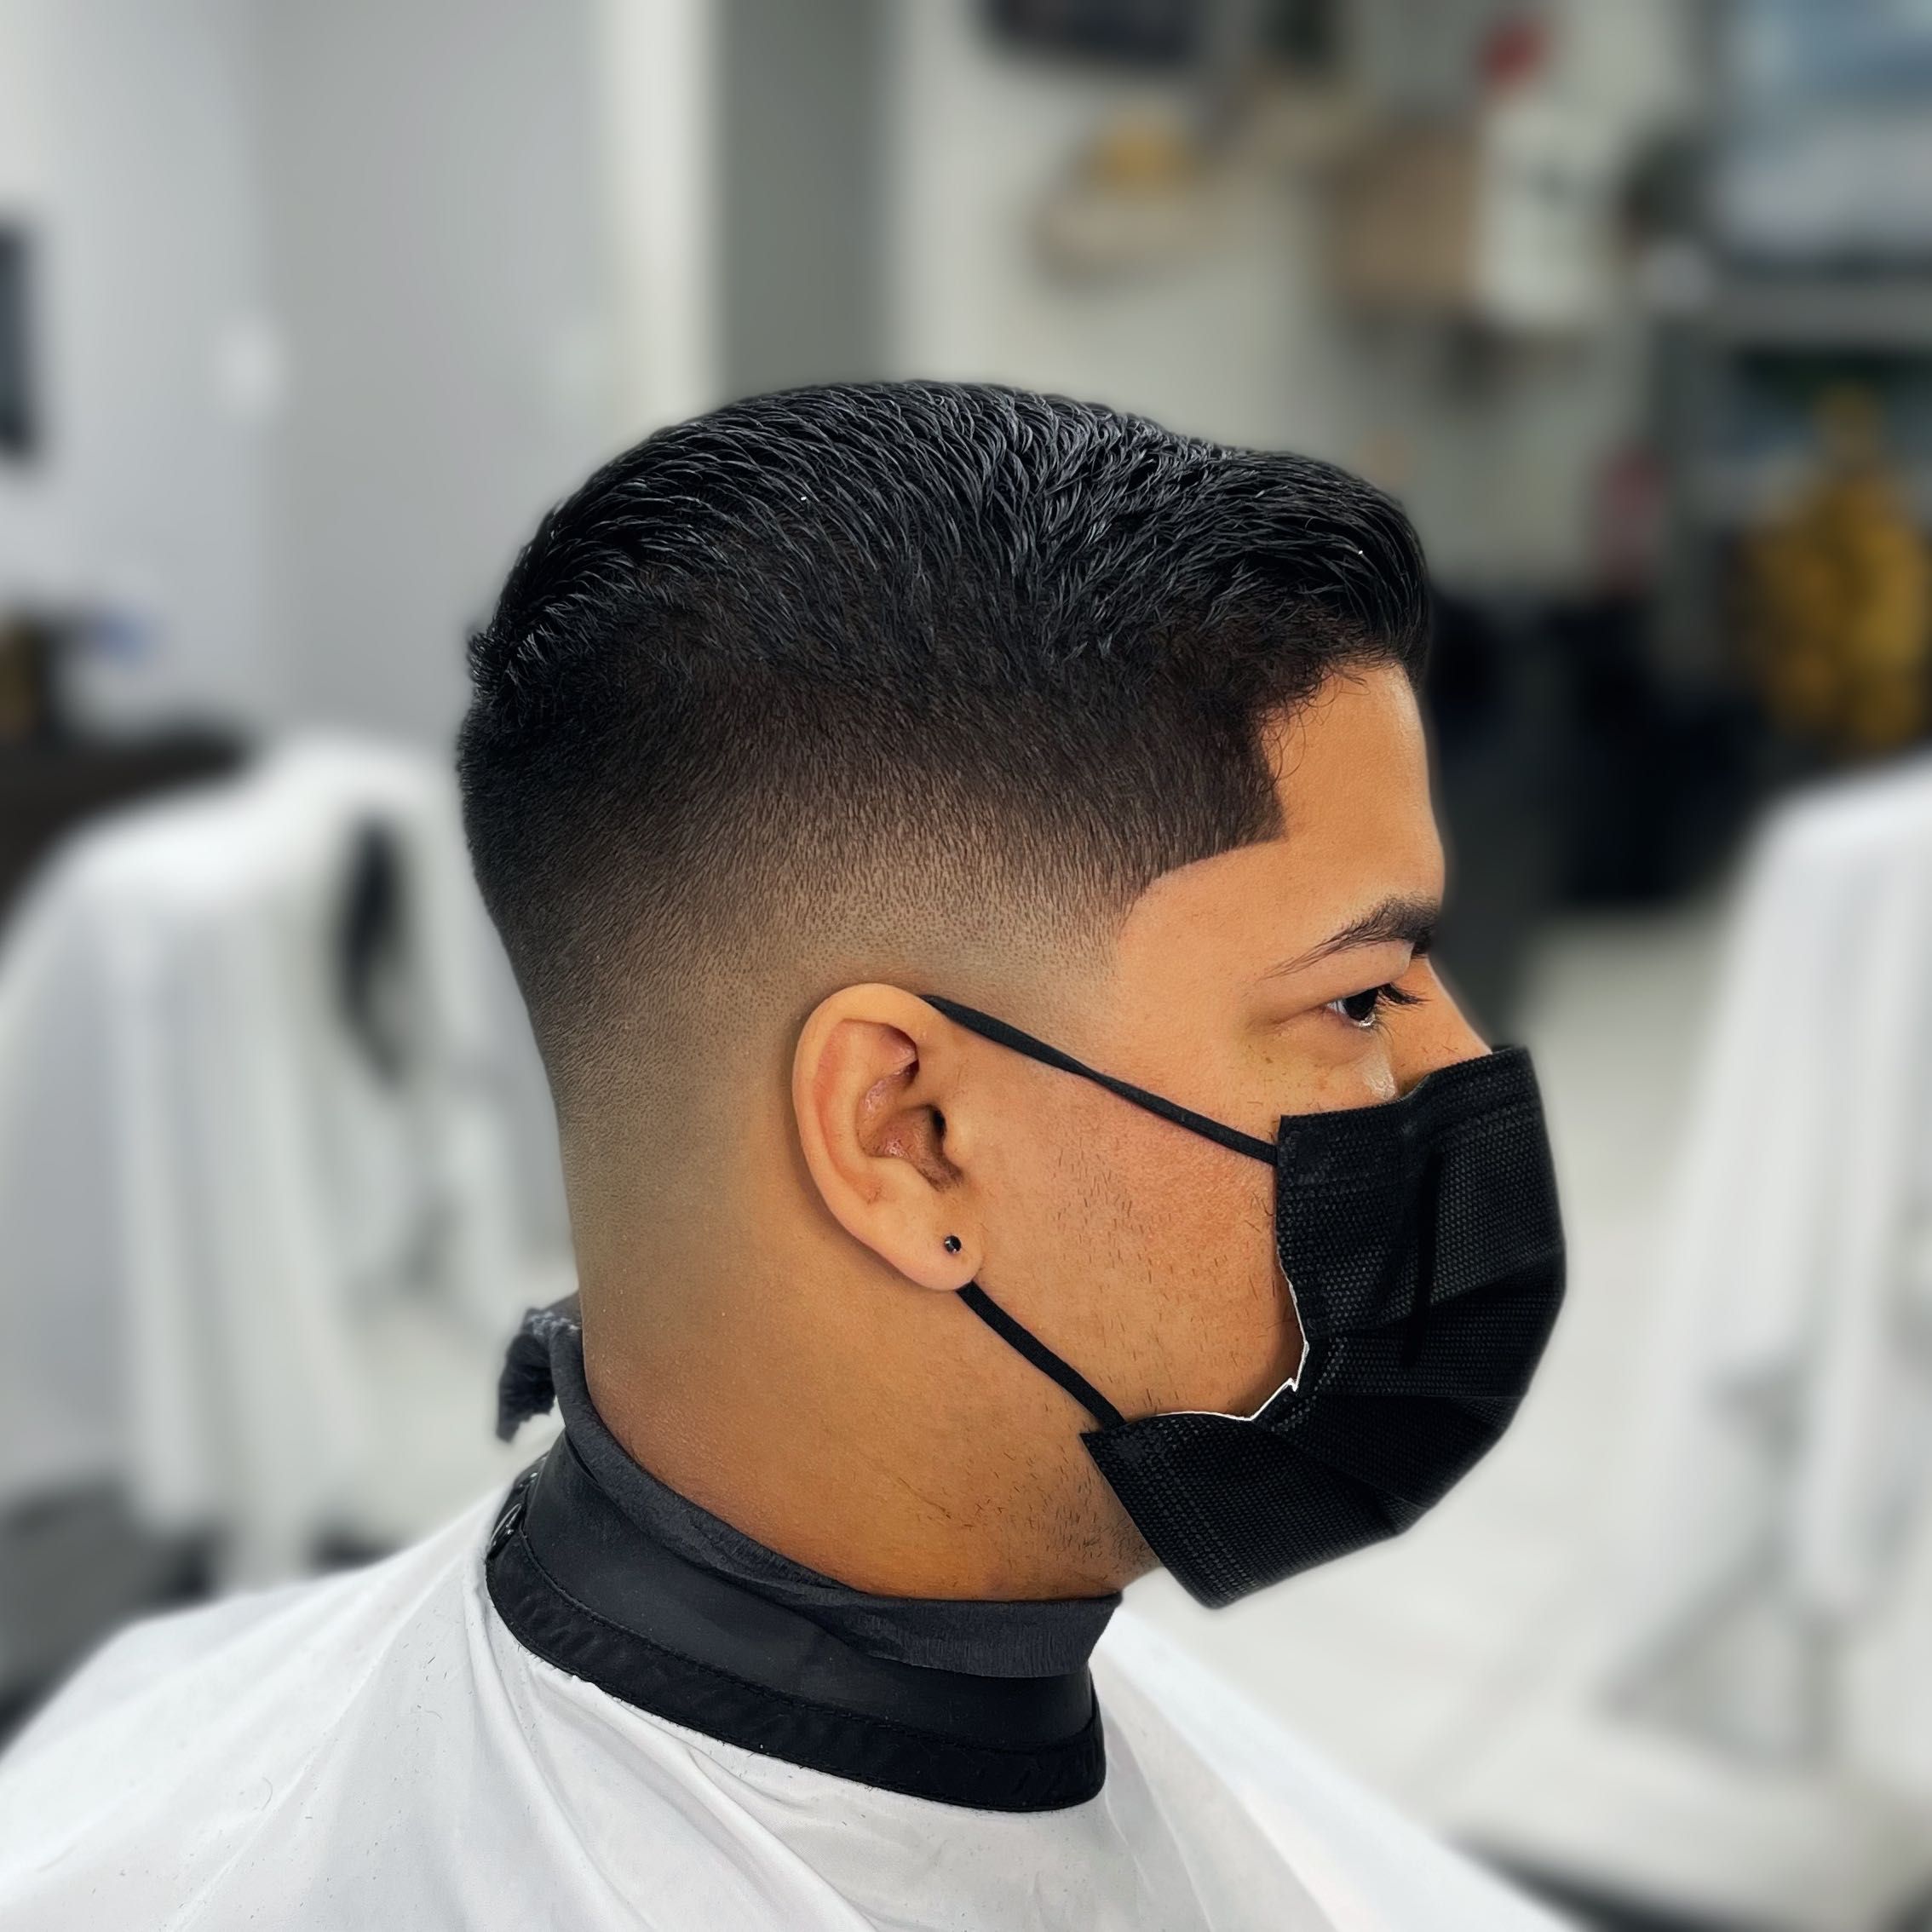 Basic haircut / corte solo (básico) 🔥⚡️ portfolio